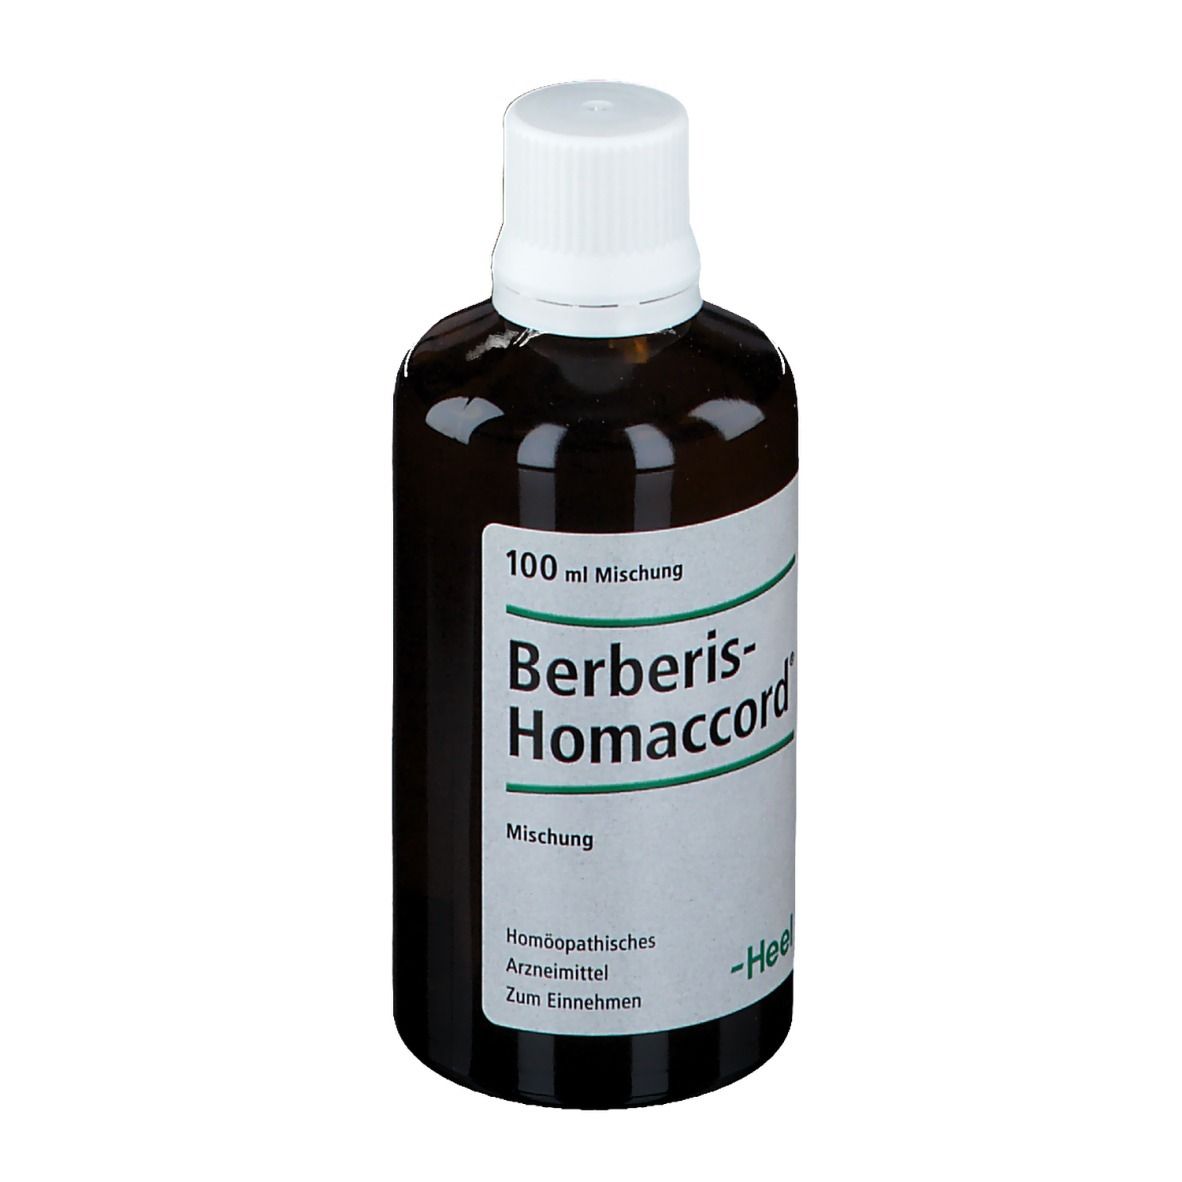 Berberis-Homaccord® Mischung